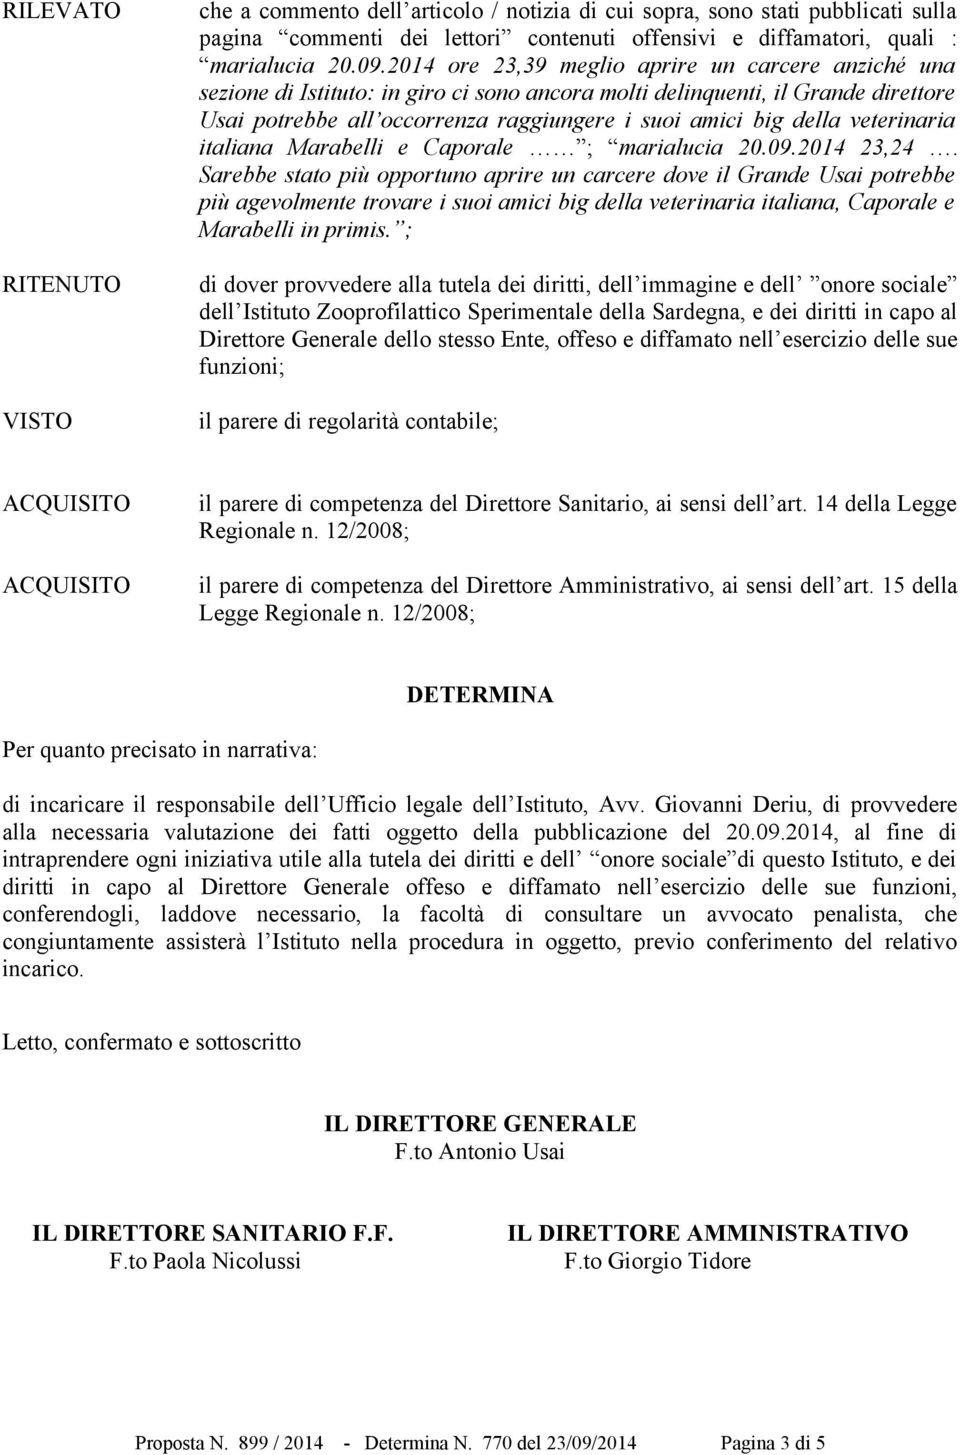 veterinaria italiana Marabelli e Caporale ; marialucia 20.09.2014 23,24.